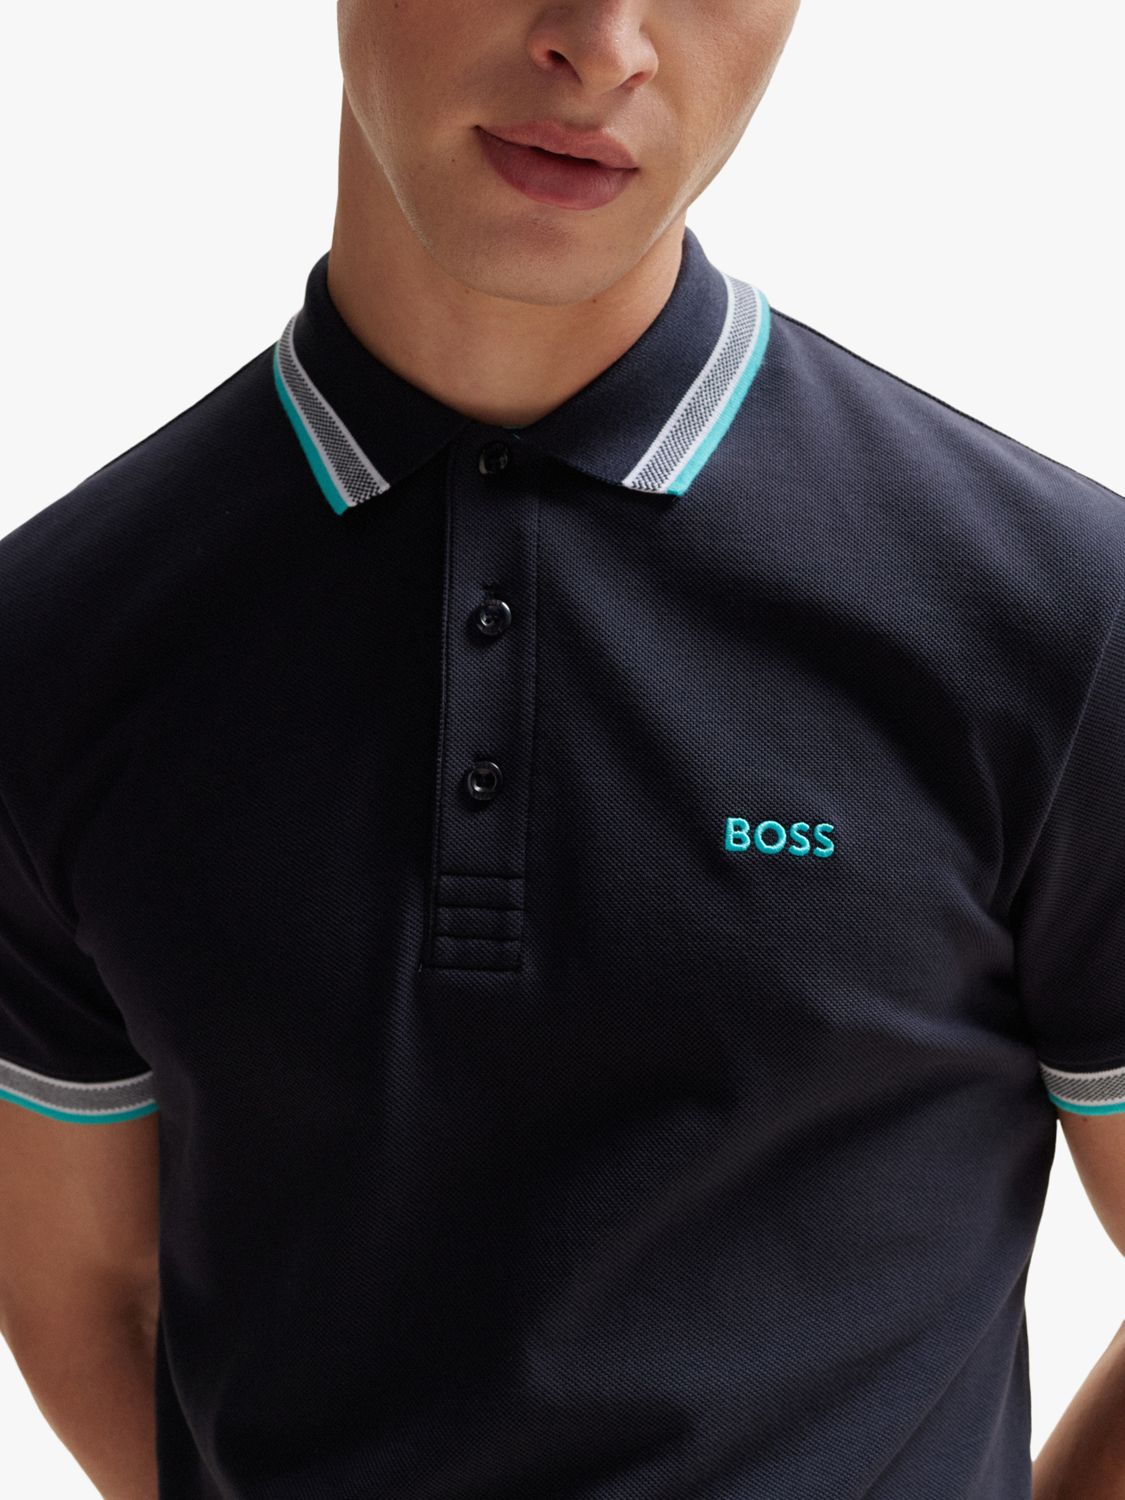 BOSS Paddy 404 Cotton Polo Top, Dark Blue, S